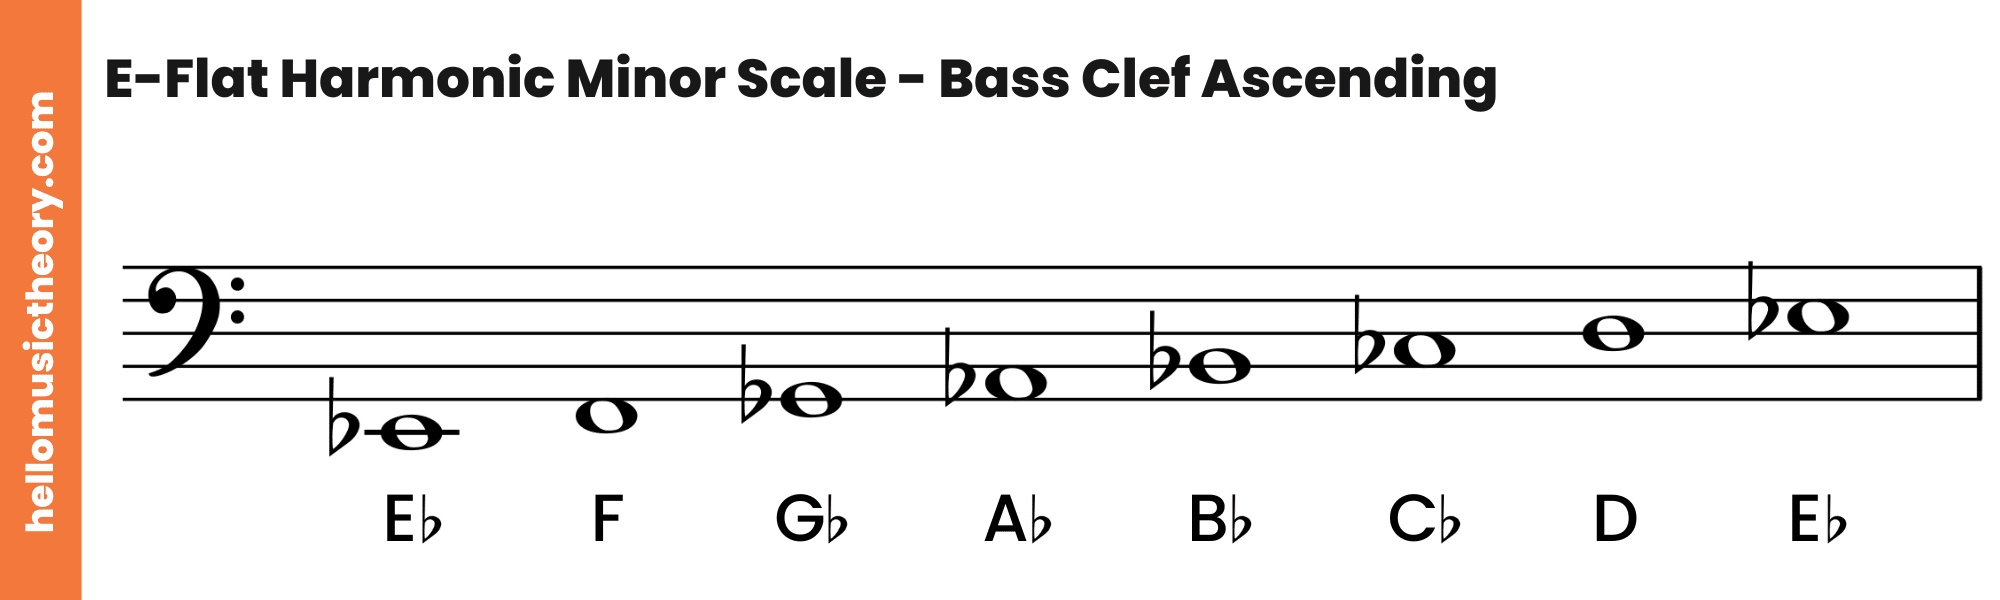 E-Flat Harmonic Minor Scale Bass Clef Ascending